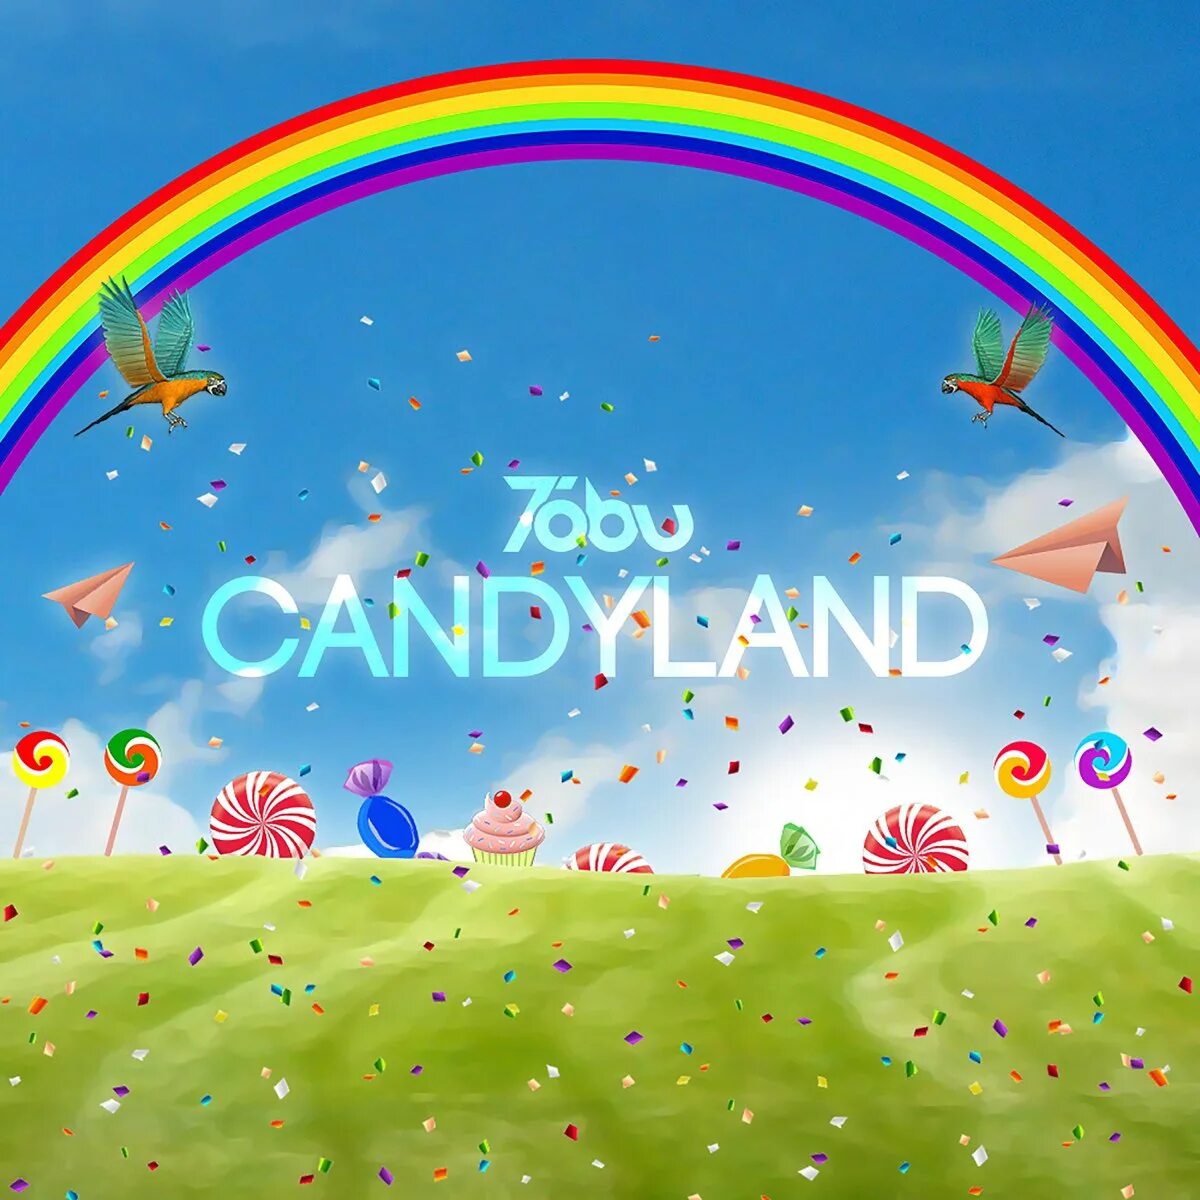 Tobu candyland. Candyland Tobu. Candyland Tobu бесконечная. Tobu Remix обложка. Candyland Song.